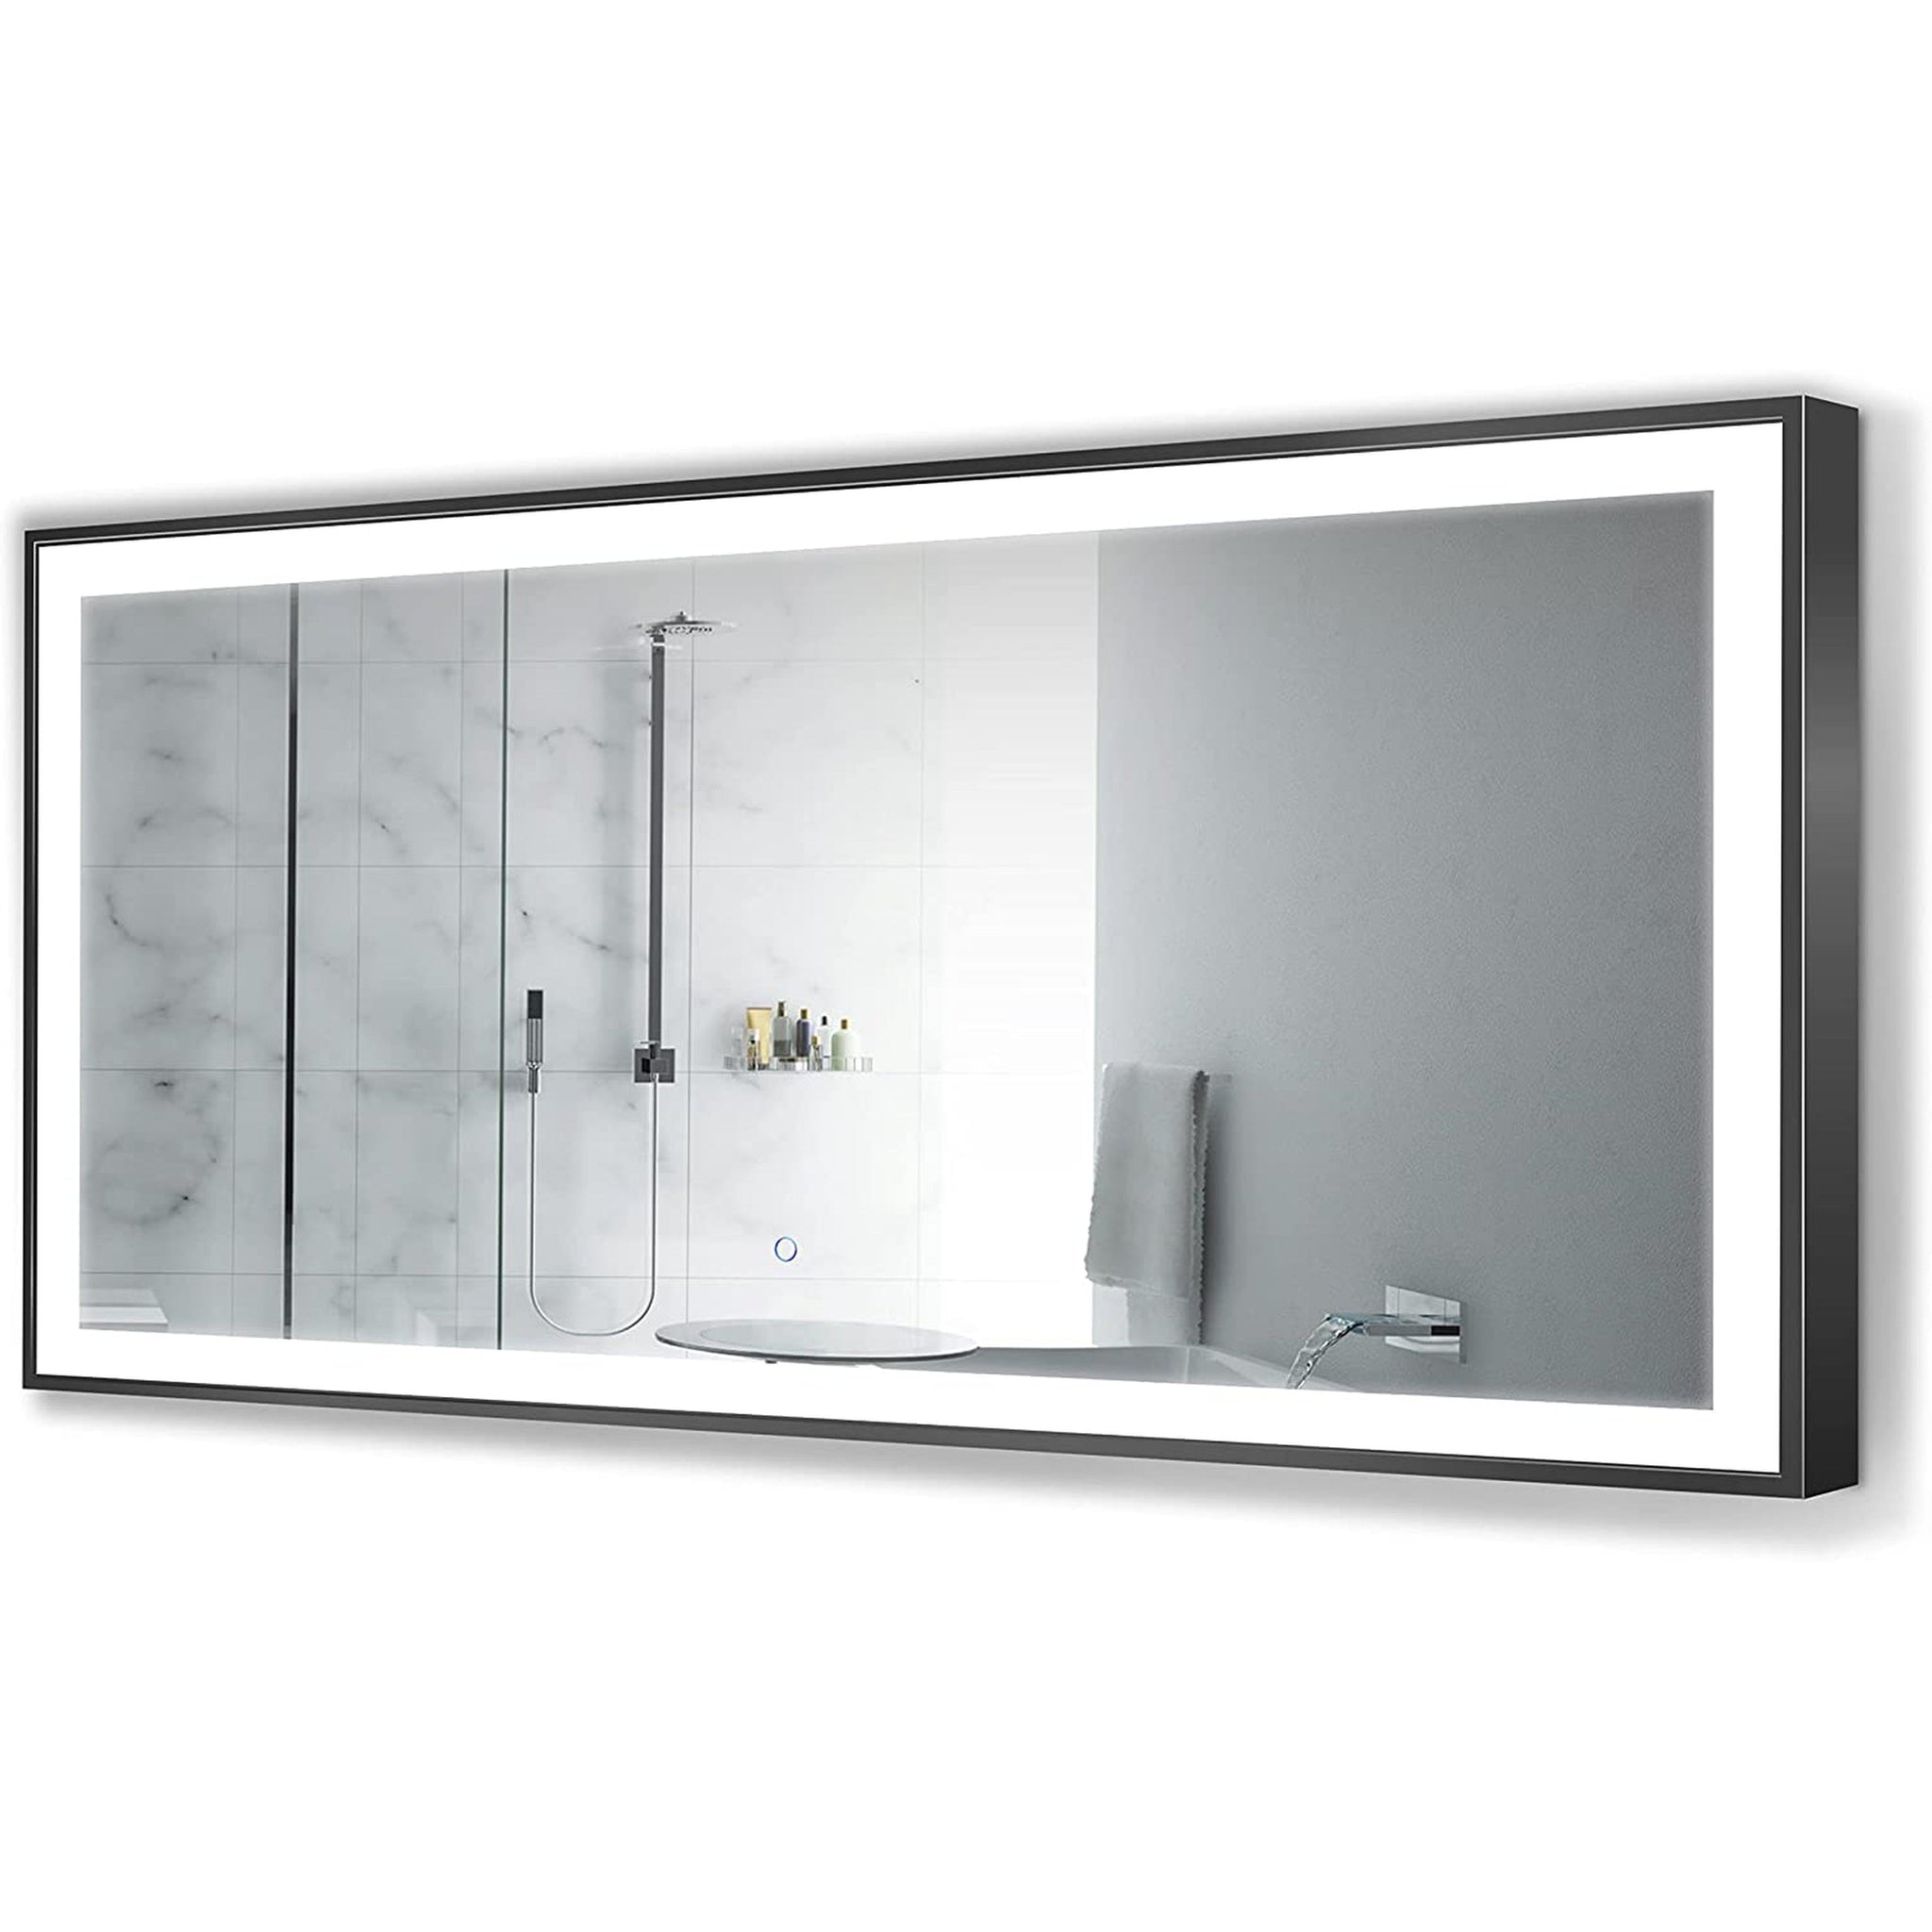 Krugg Reflections, Krugg Reflections Soho 60" x 30" 5000K Rectangular Matte Black Wall-Mounted Framed LED Bathroom Vanity Mirror With Built-in Defogger and Dimmer